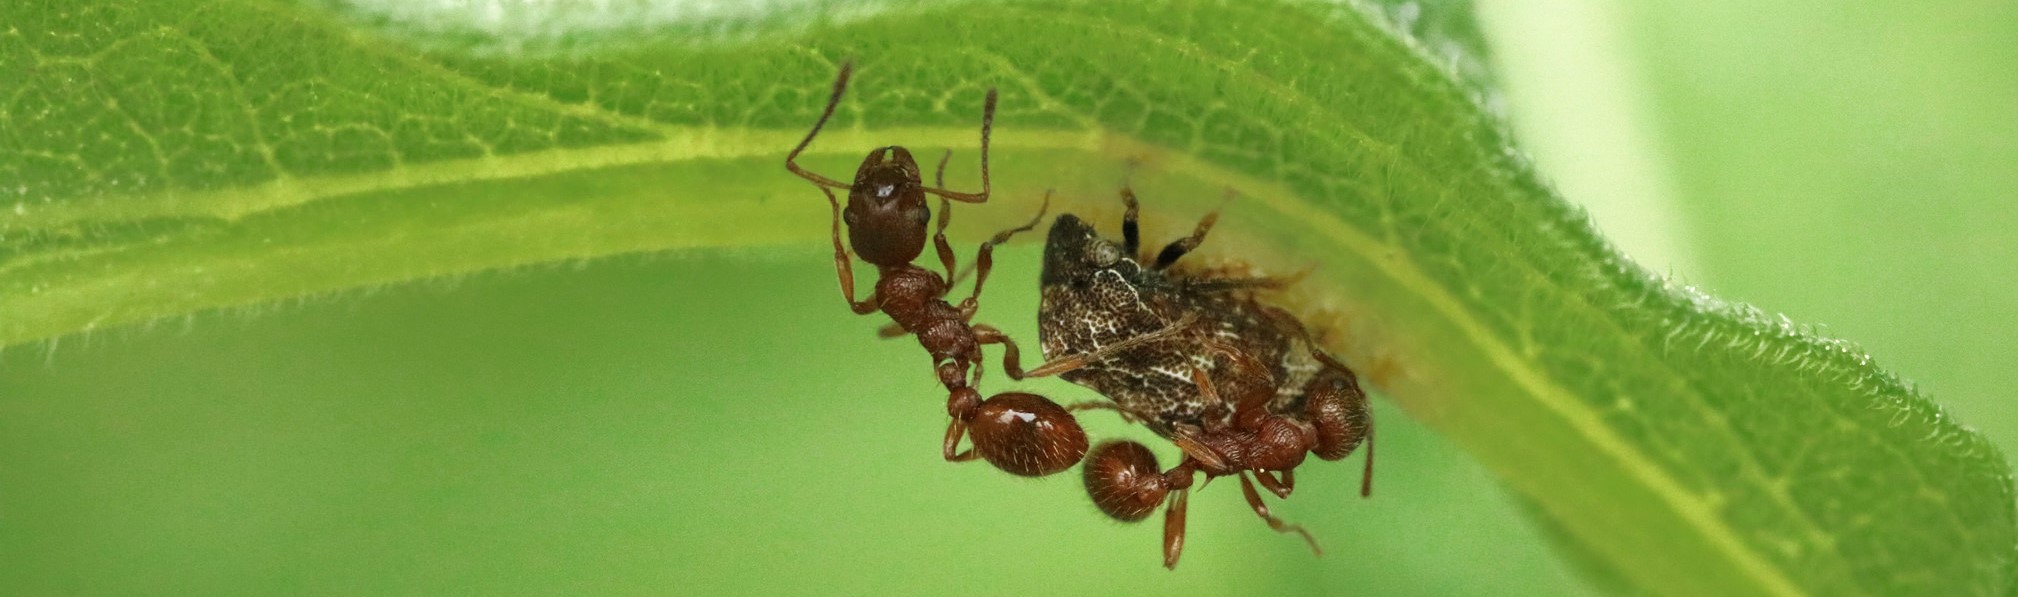 Ants tending hemipterans. Photo by Lauren Stitt, University of Guelph Laboratory Technician